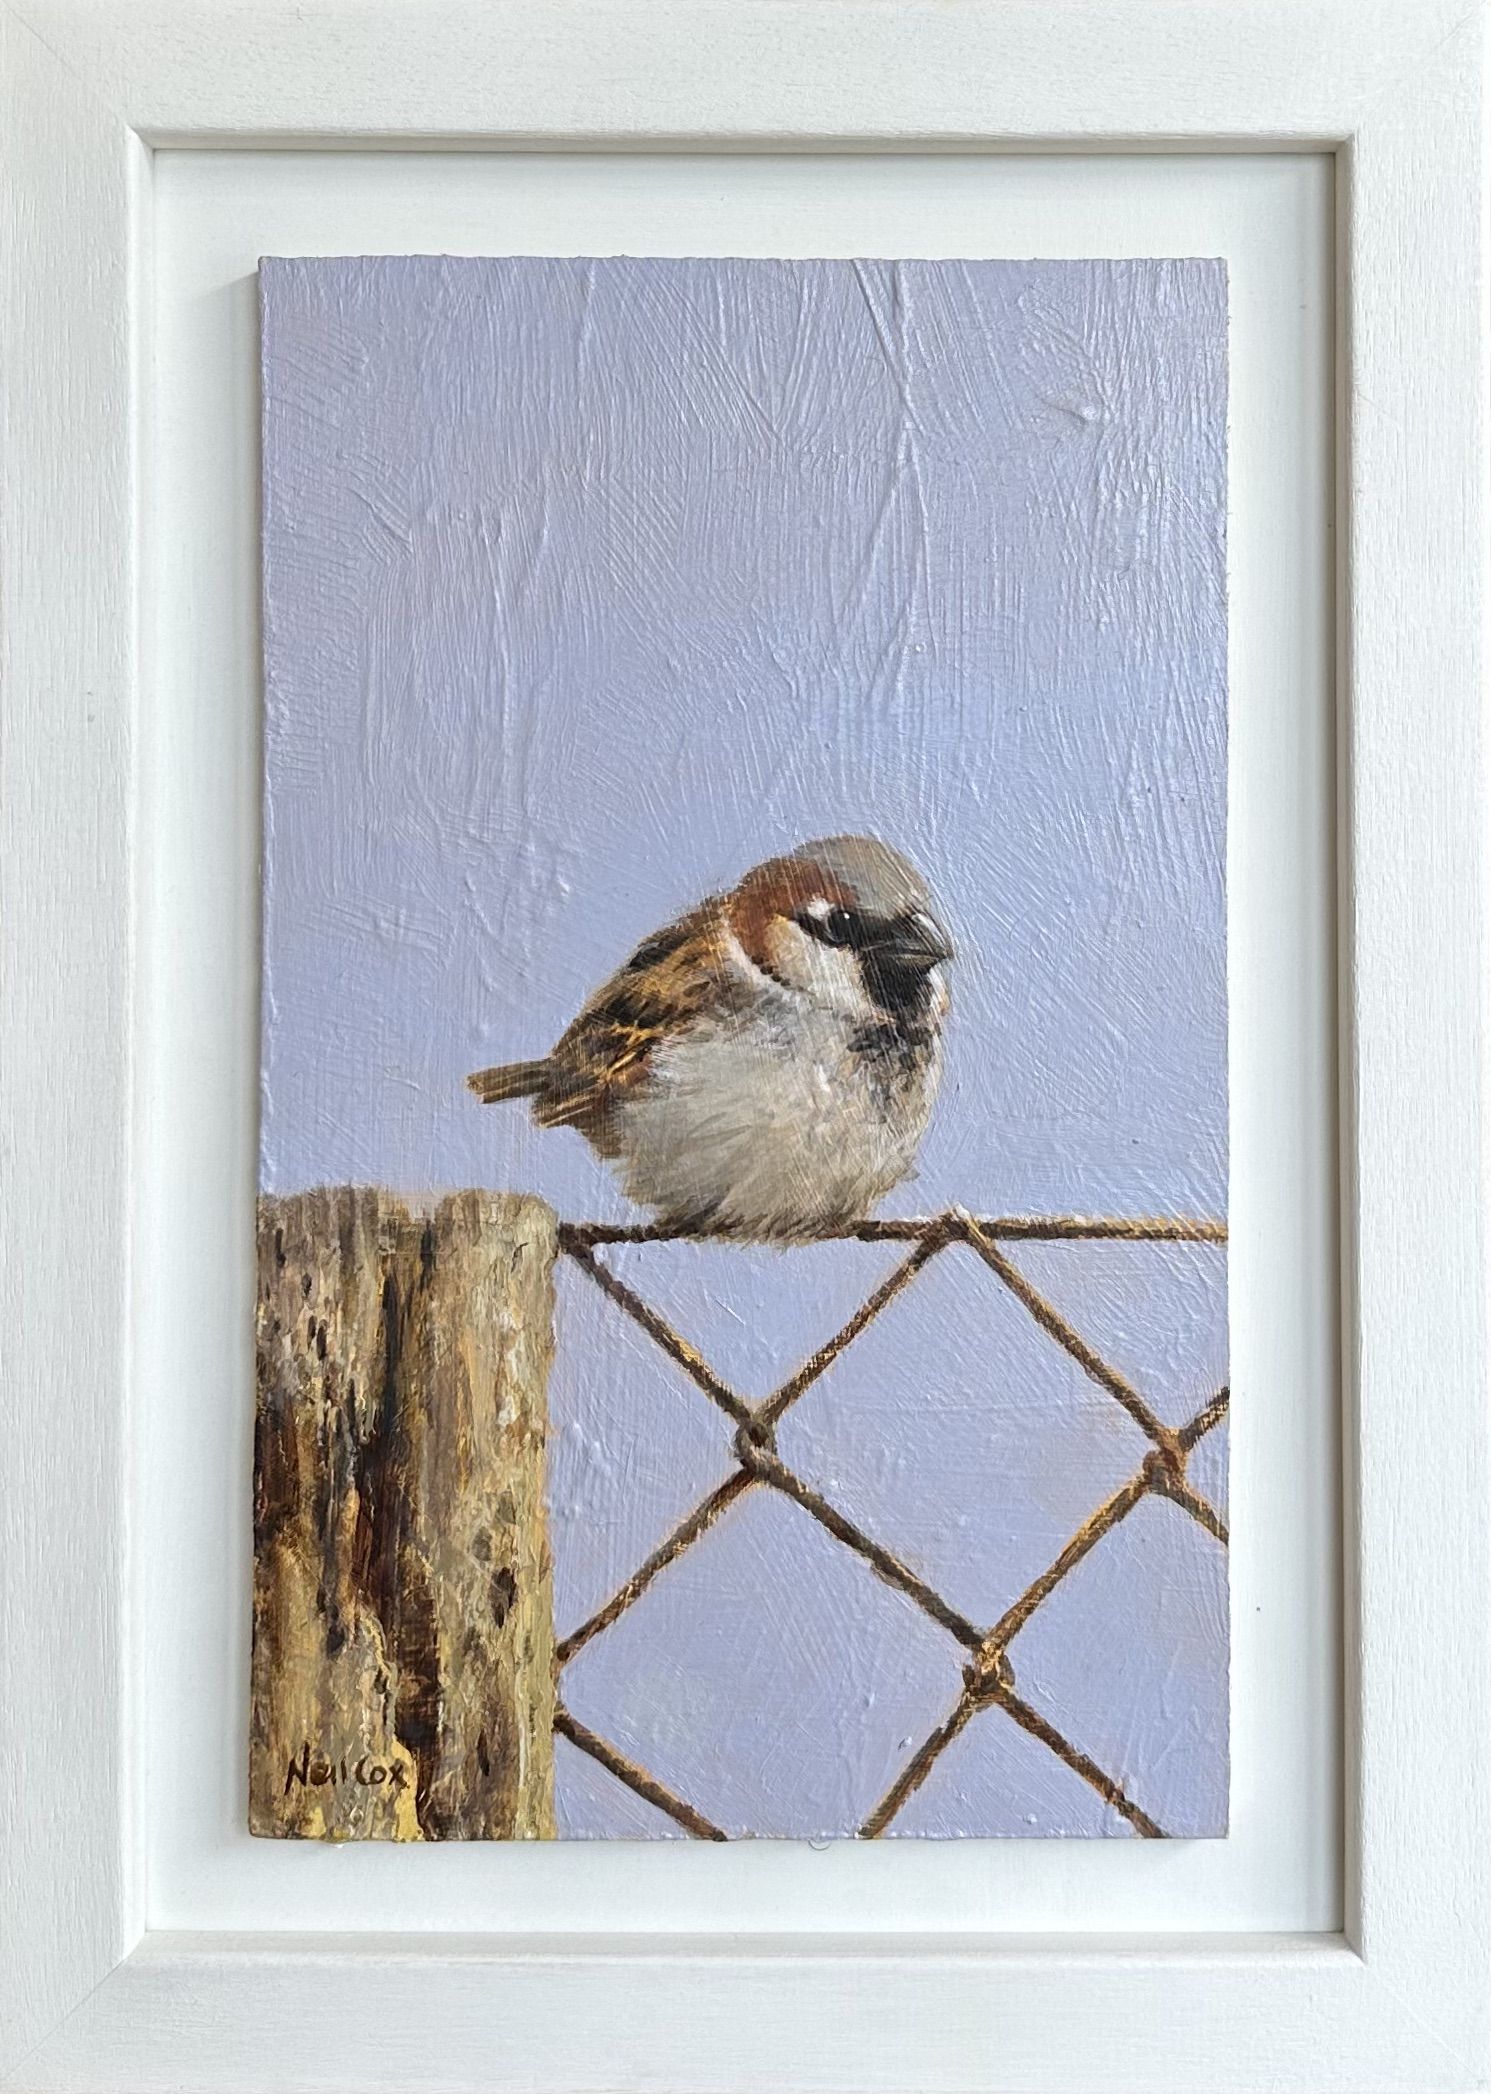 Sparrow by Neil Cox